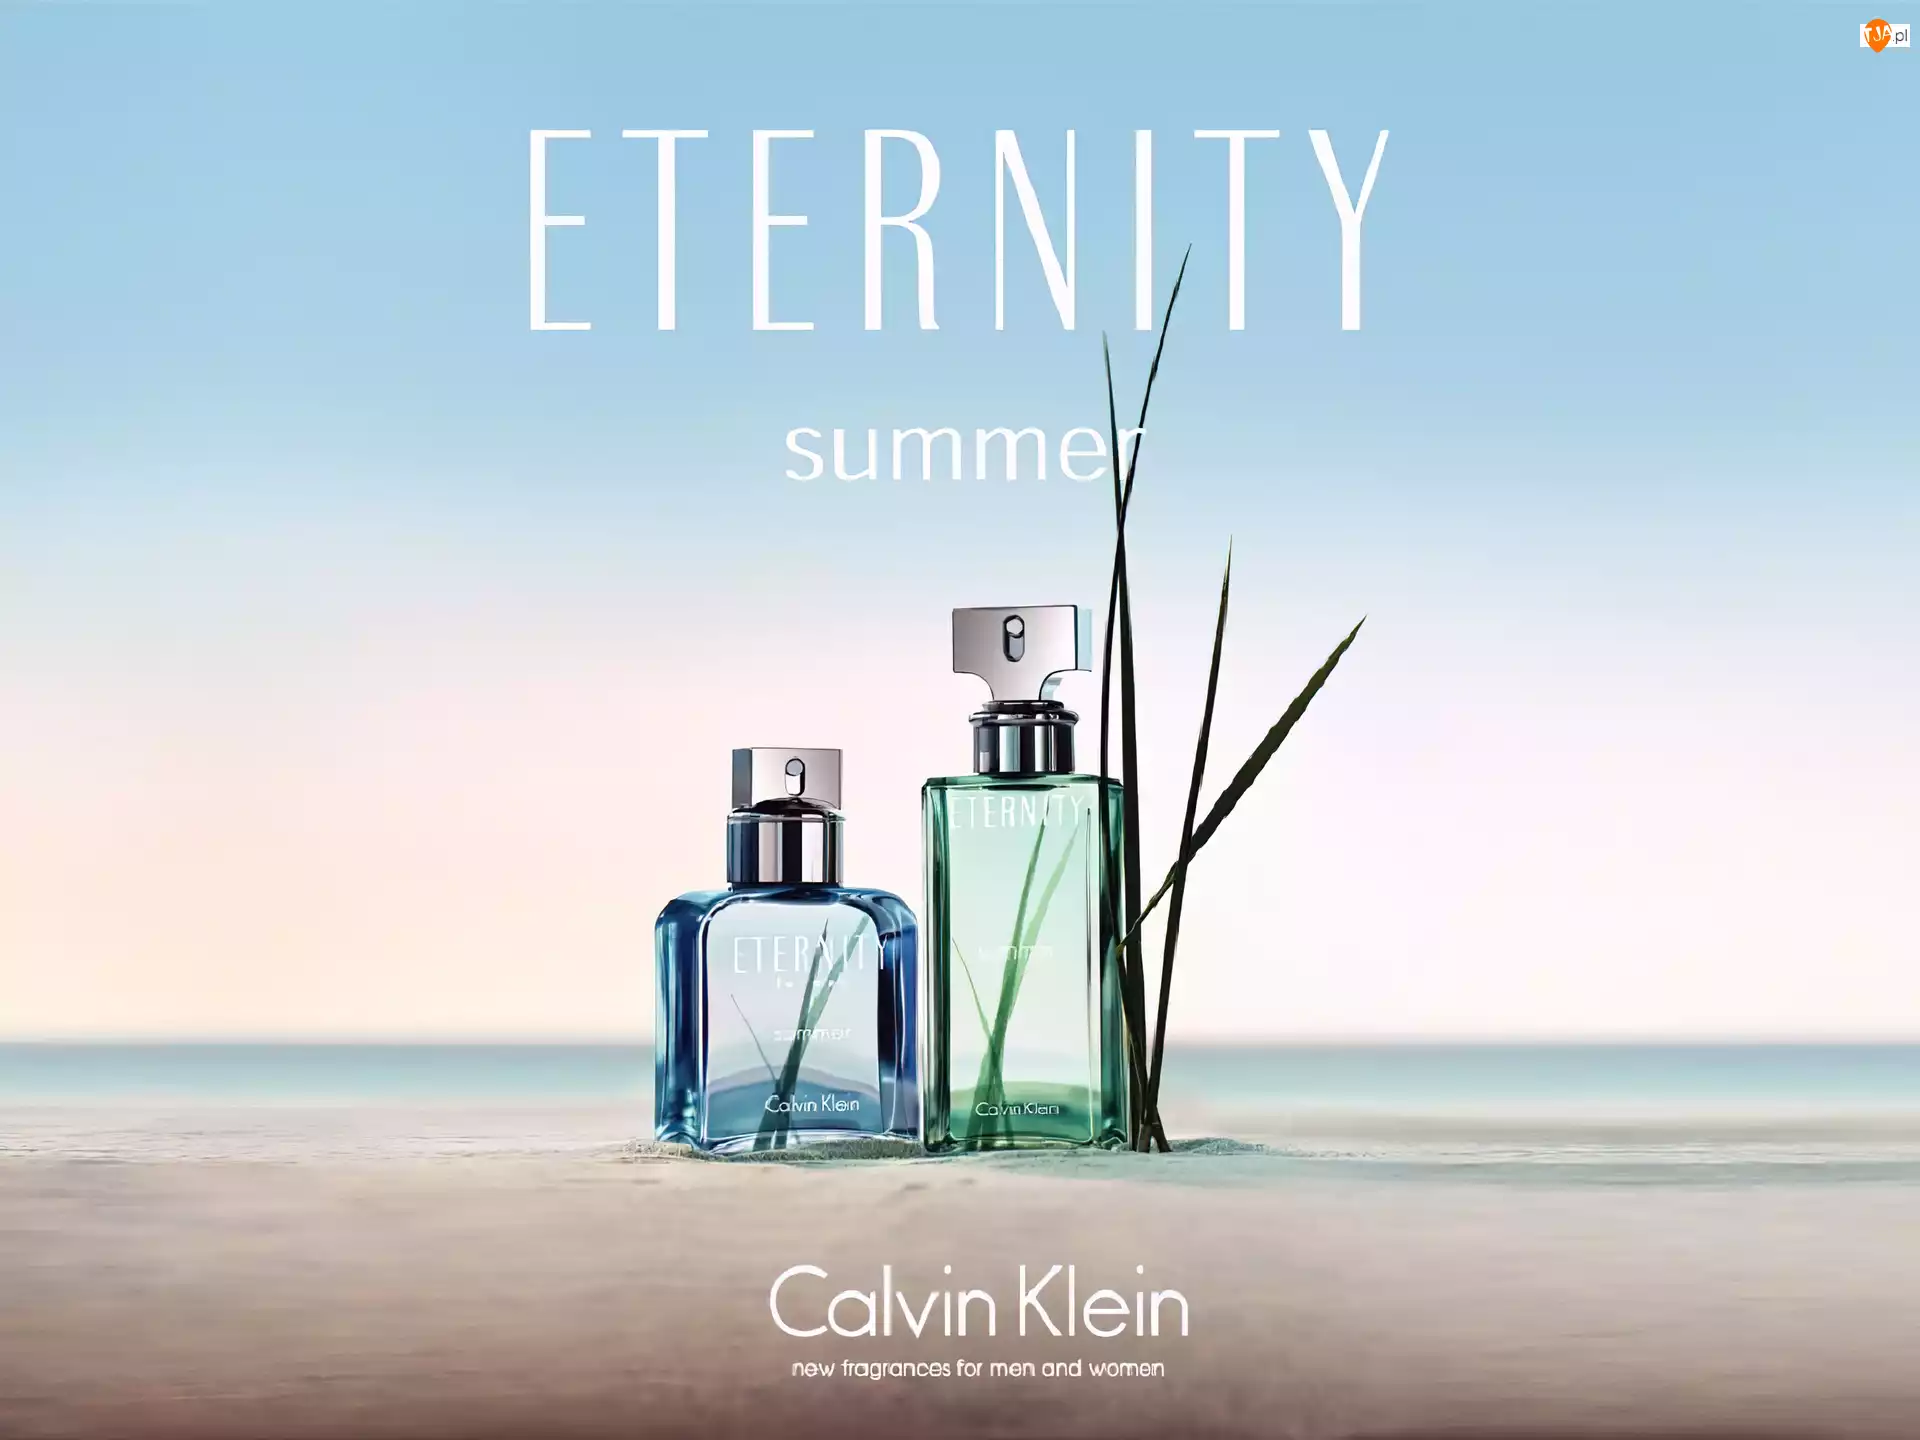 Perfumy, Calvin Klein, Eternity Summer